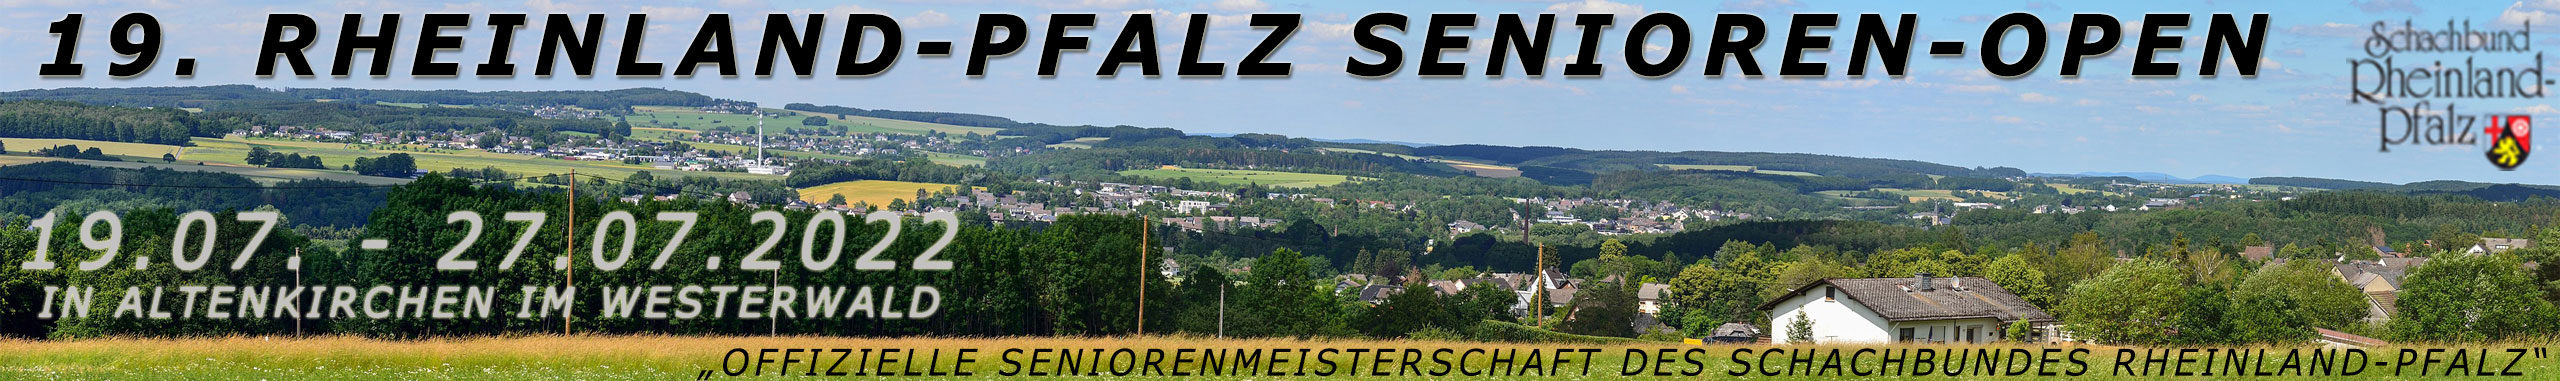 Rheinland-Pfalz-Seniorenopen